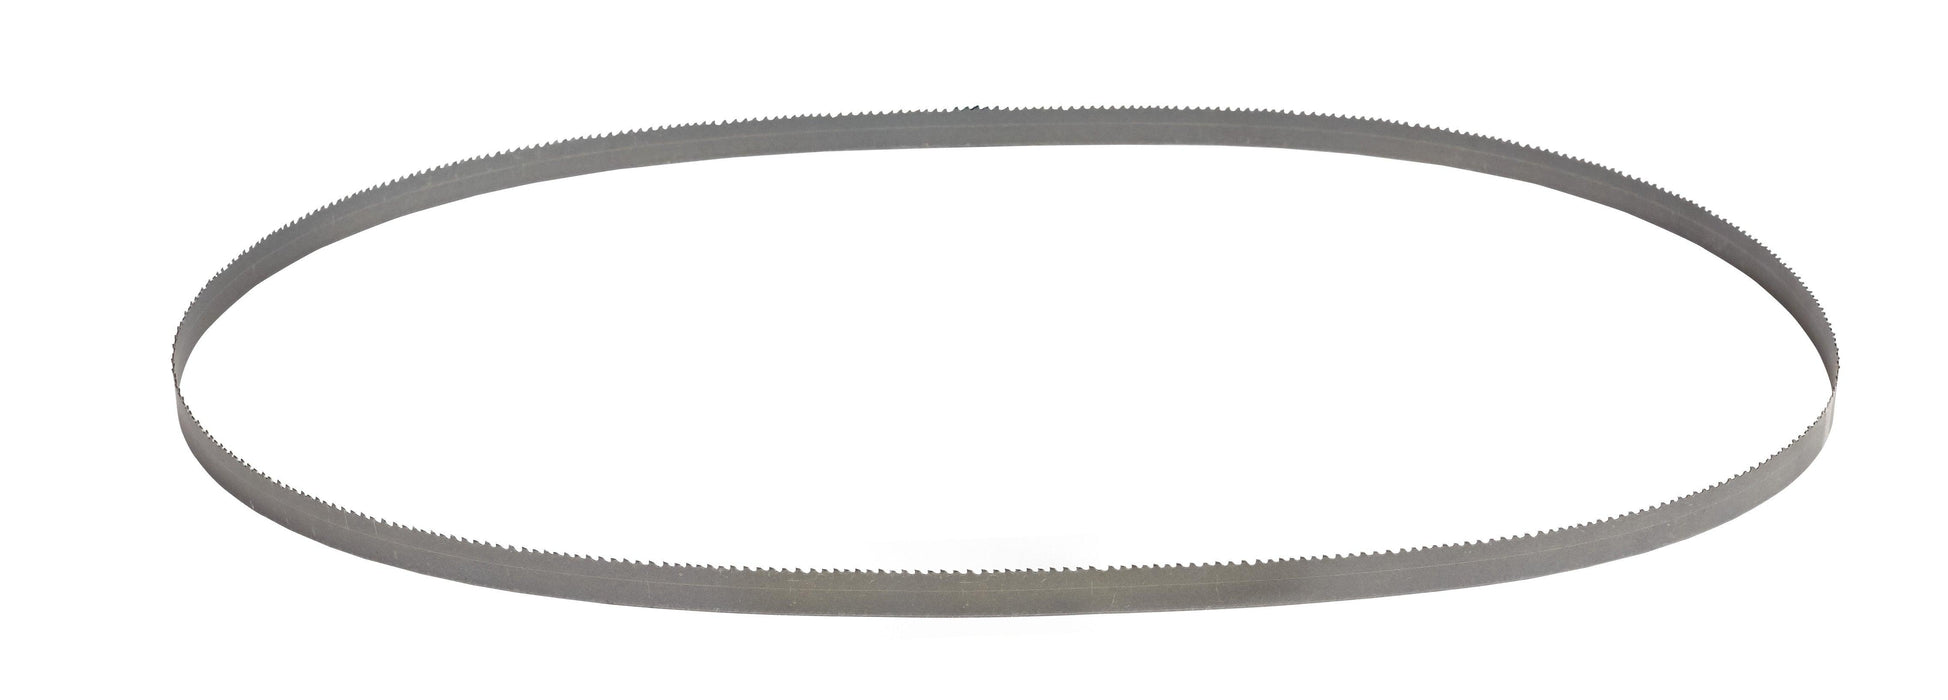 Milwaukee 18 TPI Standard / Deep Cut Portable Band Saw Blade (3 Pack), Model 48-39-0521 - Orka